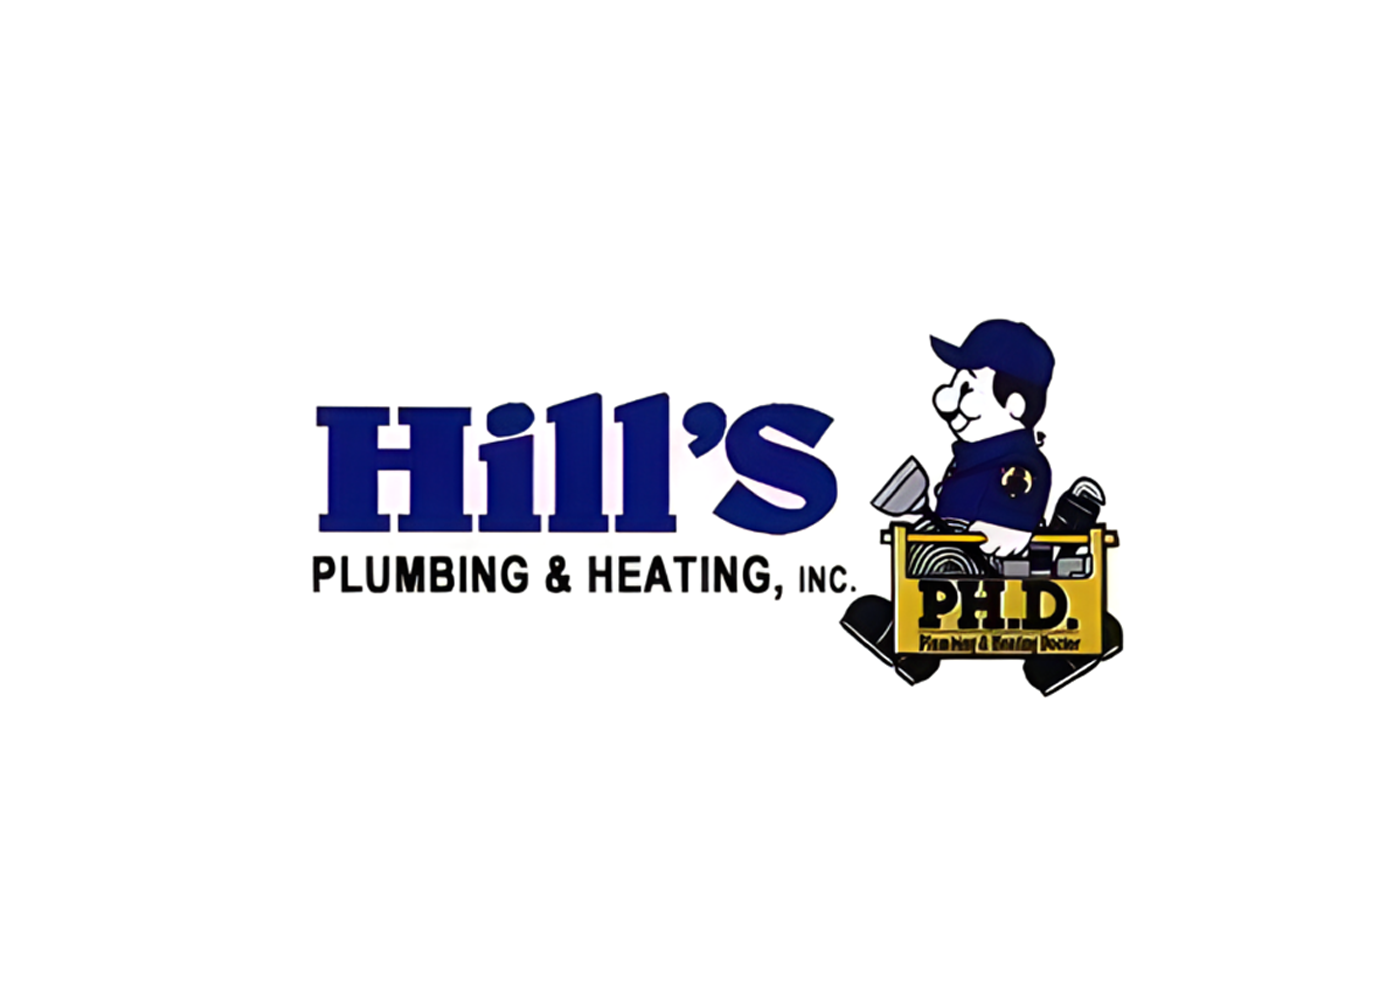 Hill's Plumbing & Heating logo.